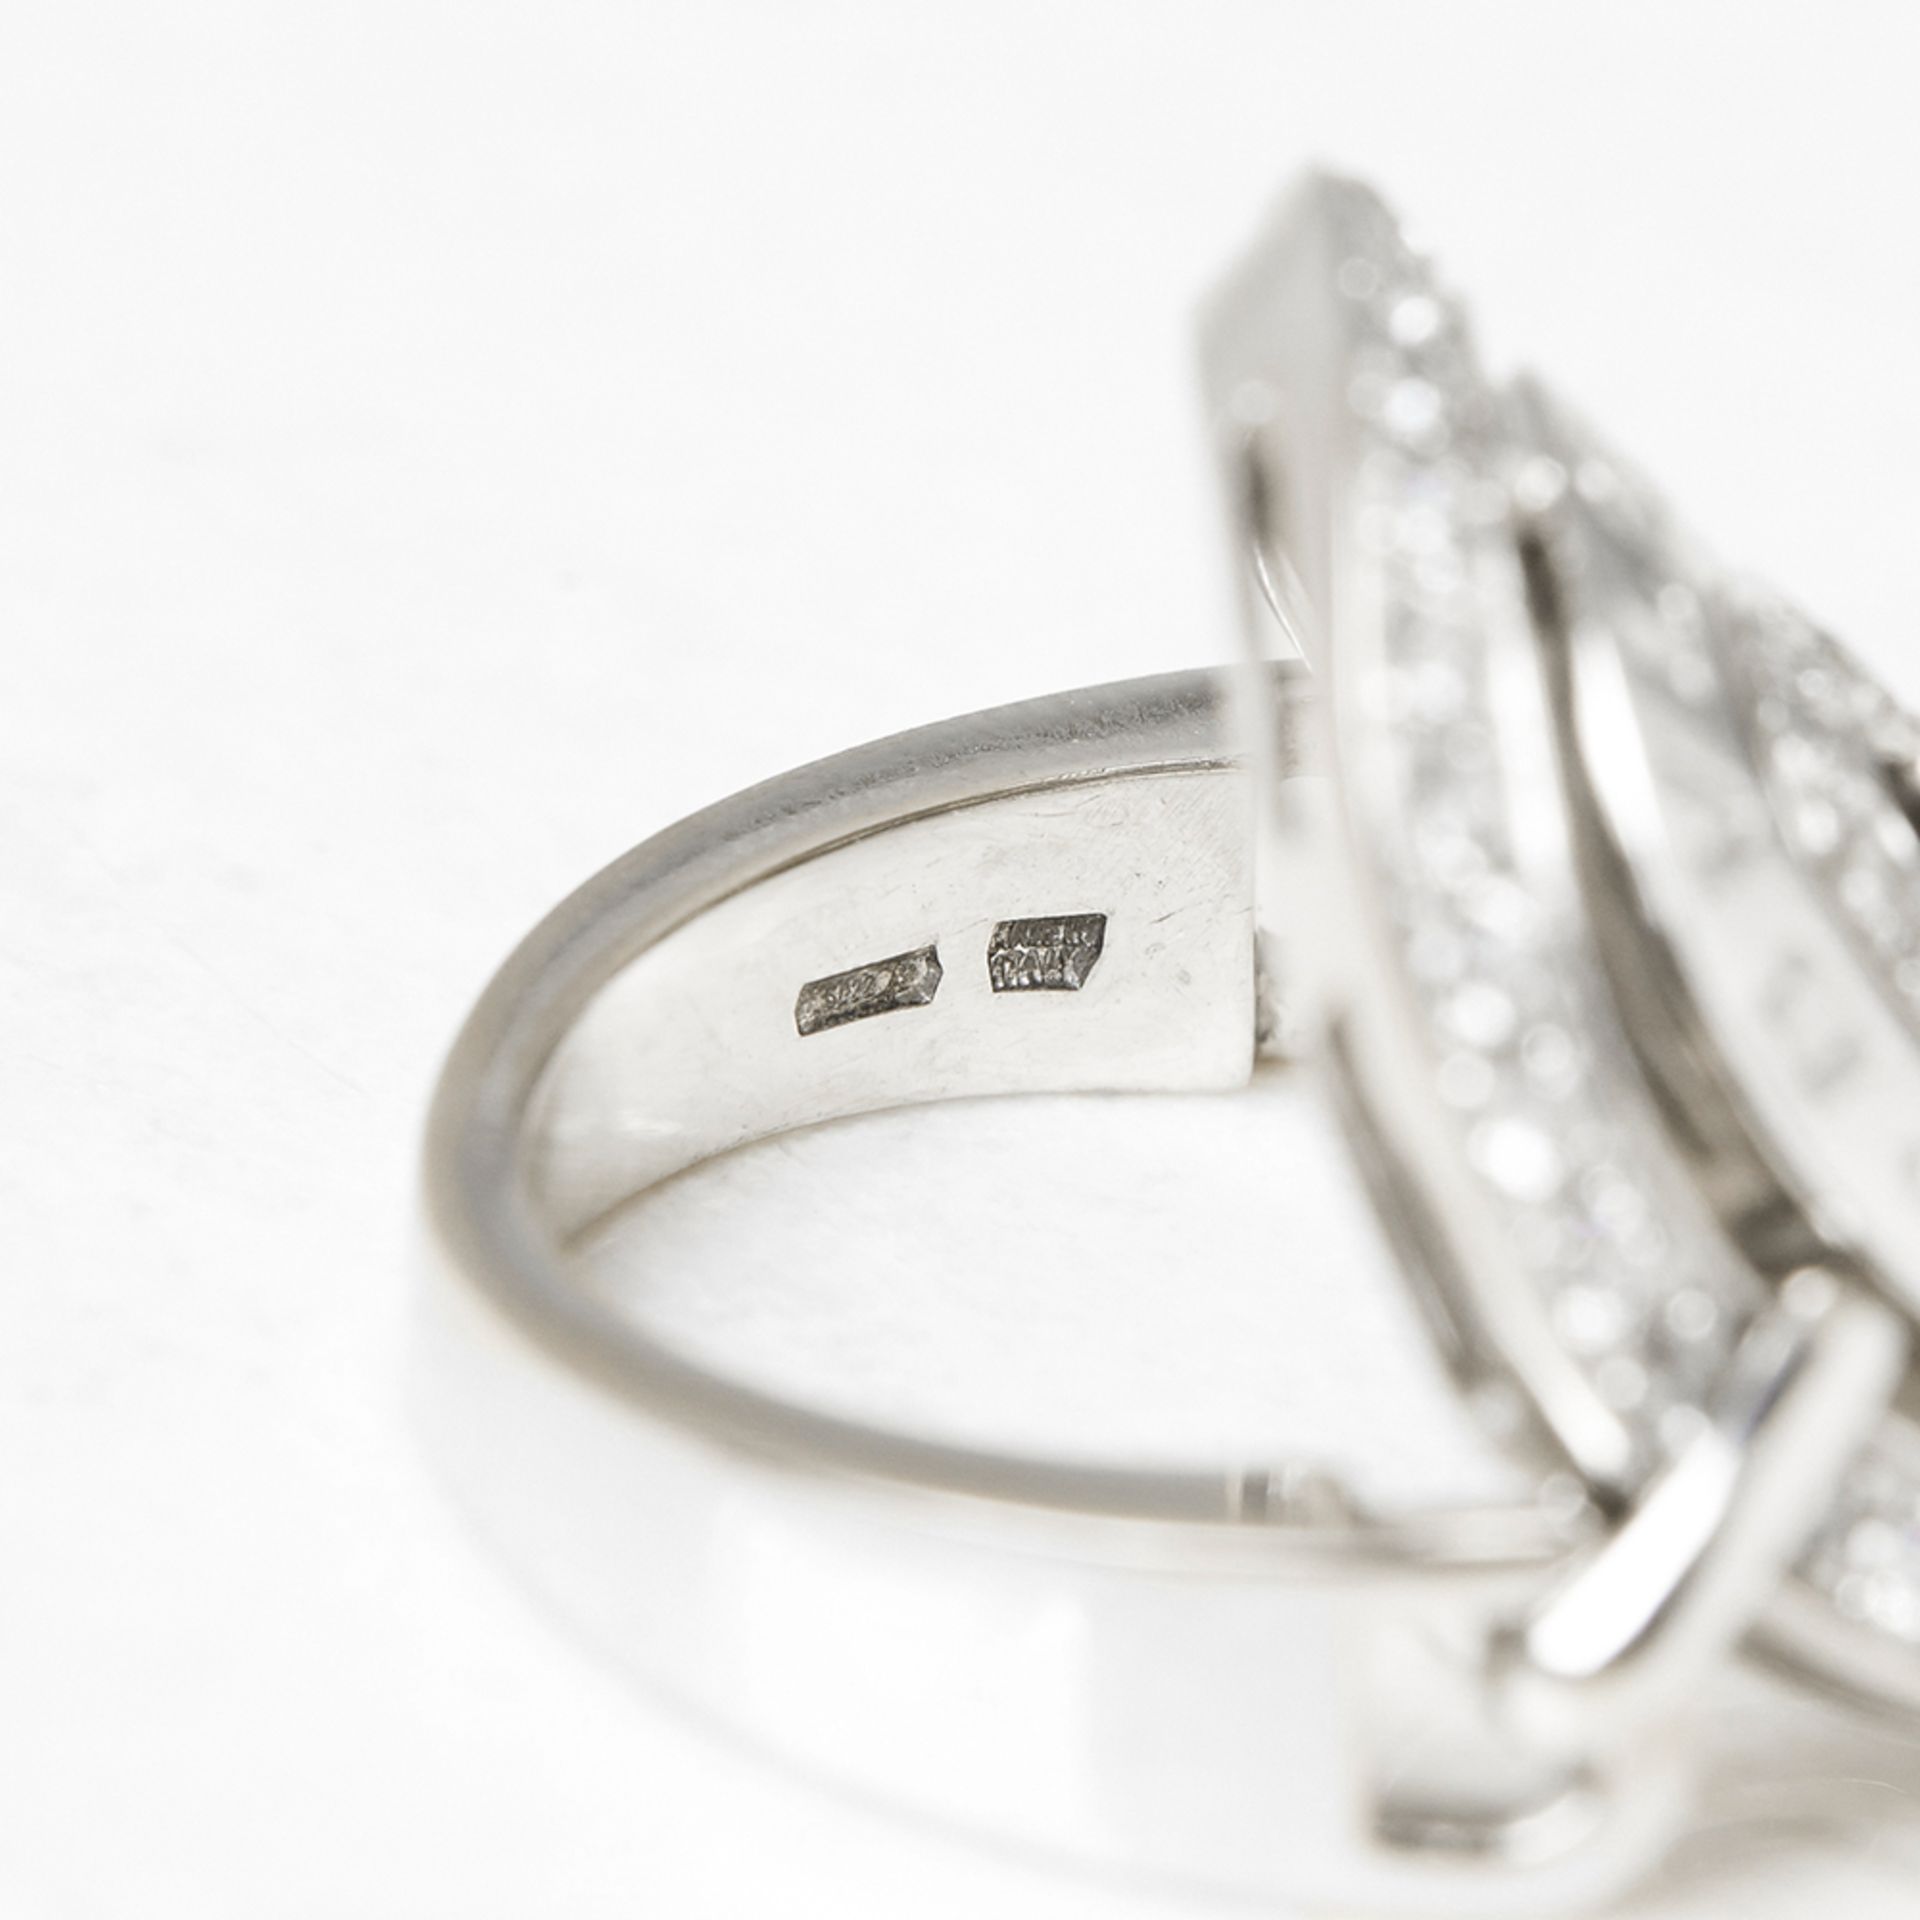 Bulgari 18k White Gold Diamond Cerchi Ring - Image 7 of 12